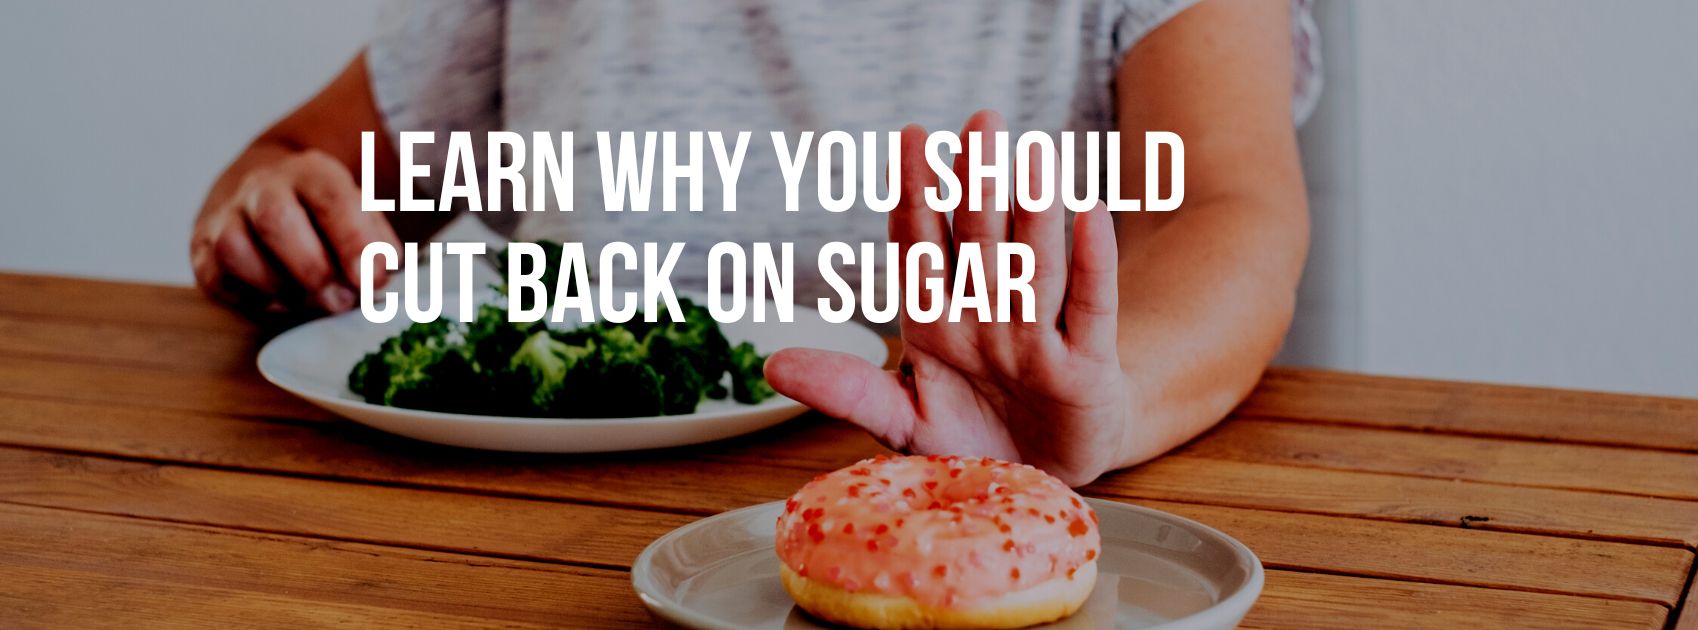 Learn Why You Should Cut Back on Sugar